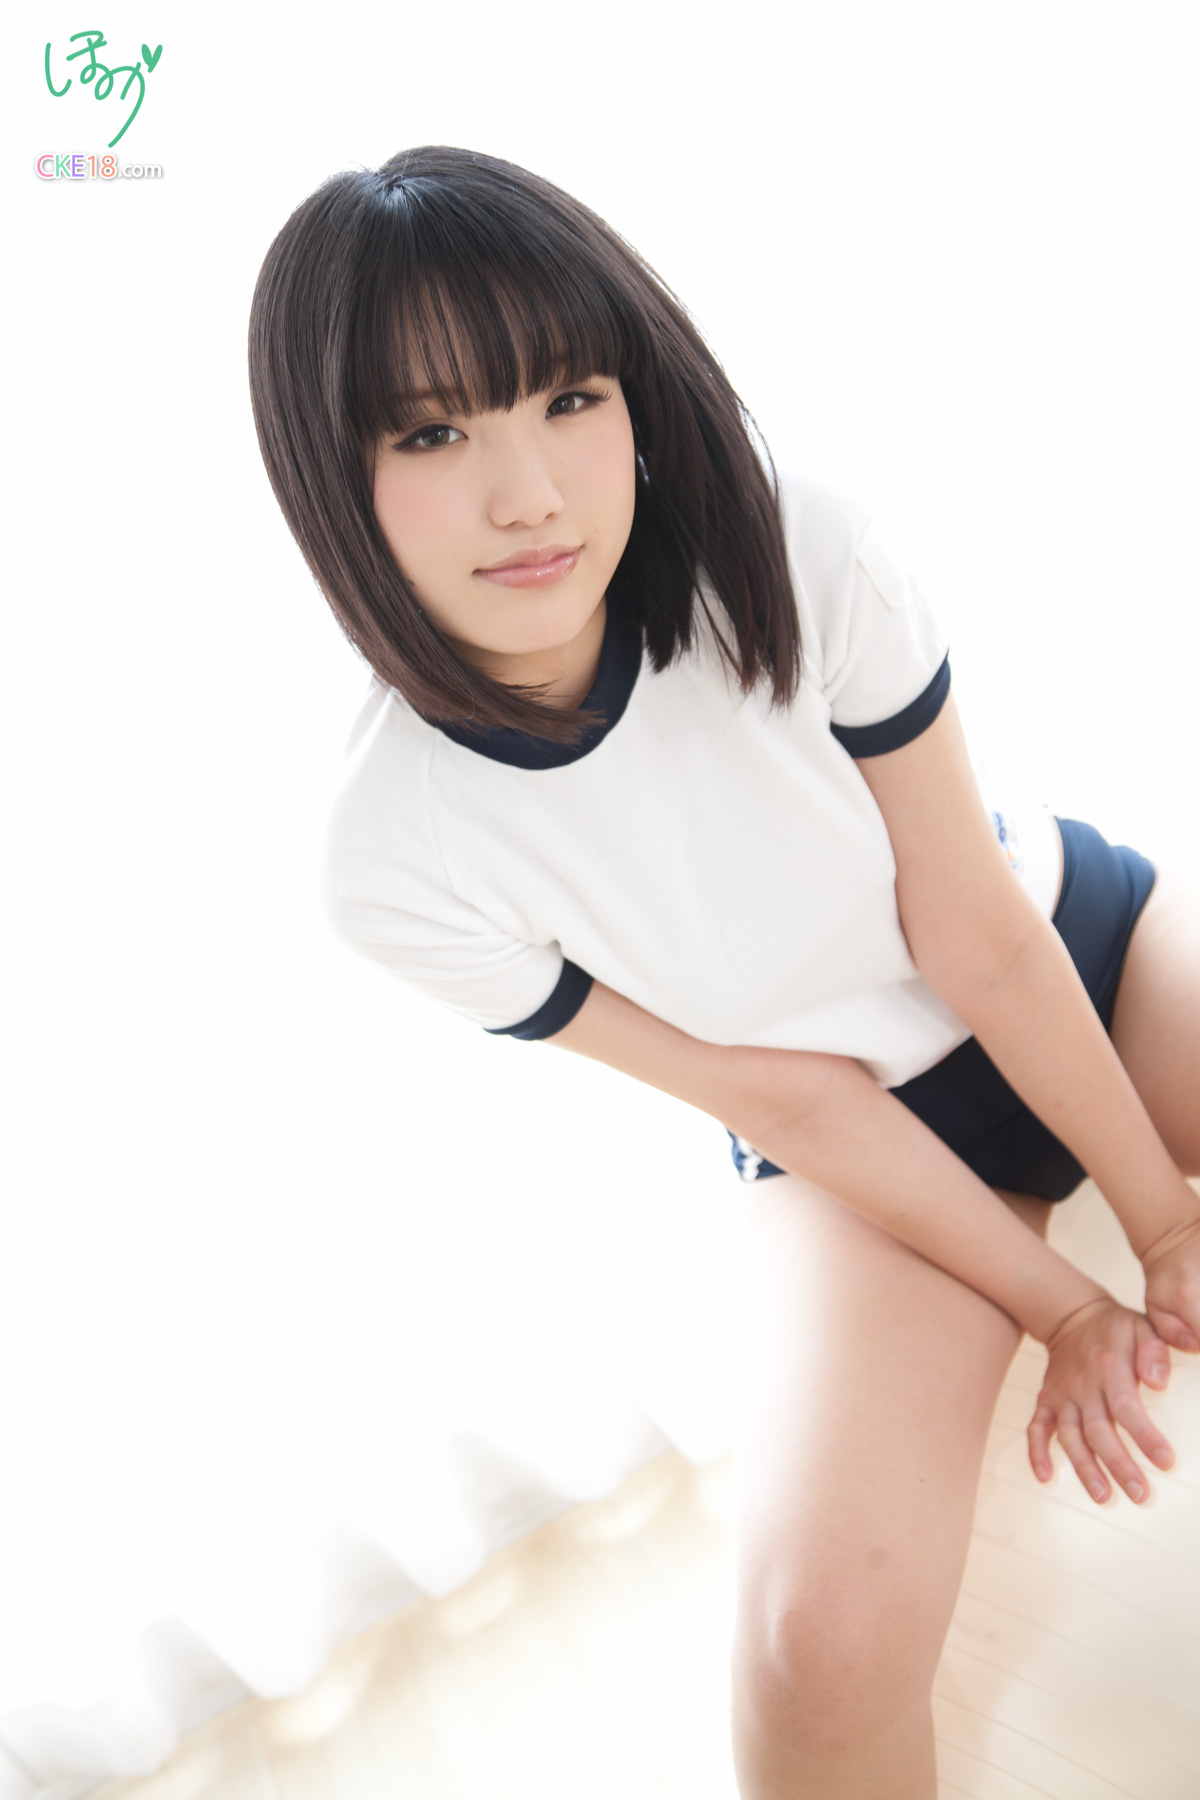 Japan Teen 18 - Japanese teen cutie Honoka gets sassy in her gym shorts ...